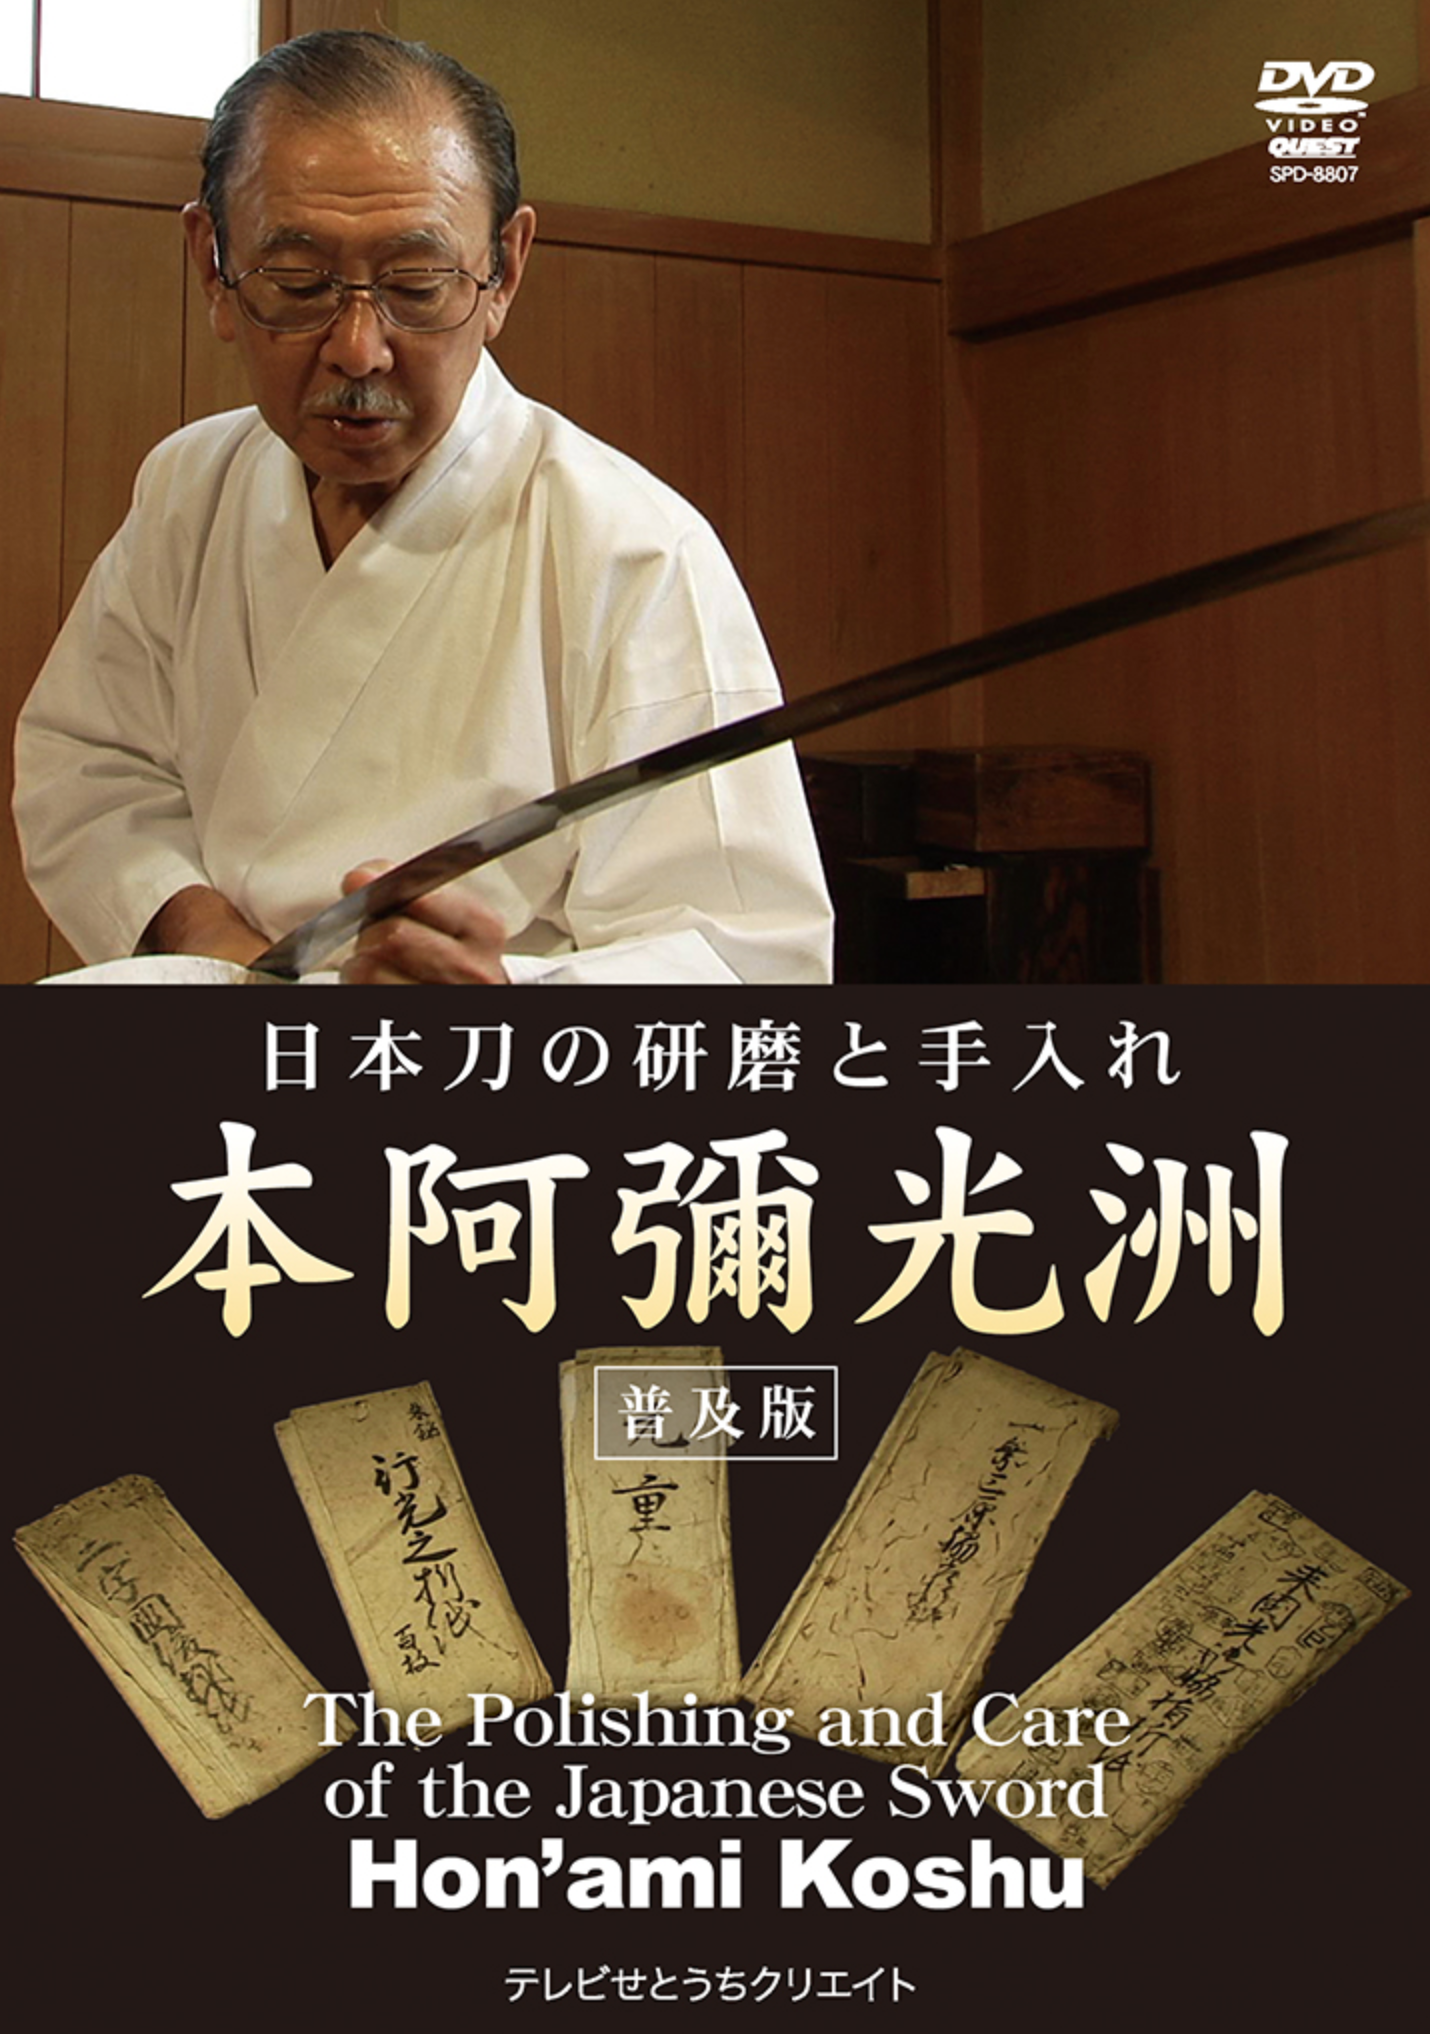 Polishing & Care of the Japanese Sword DVD by Hon'ami Koshu - Budovideos Inc